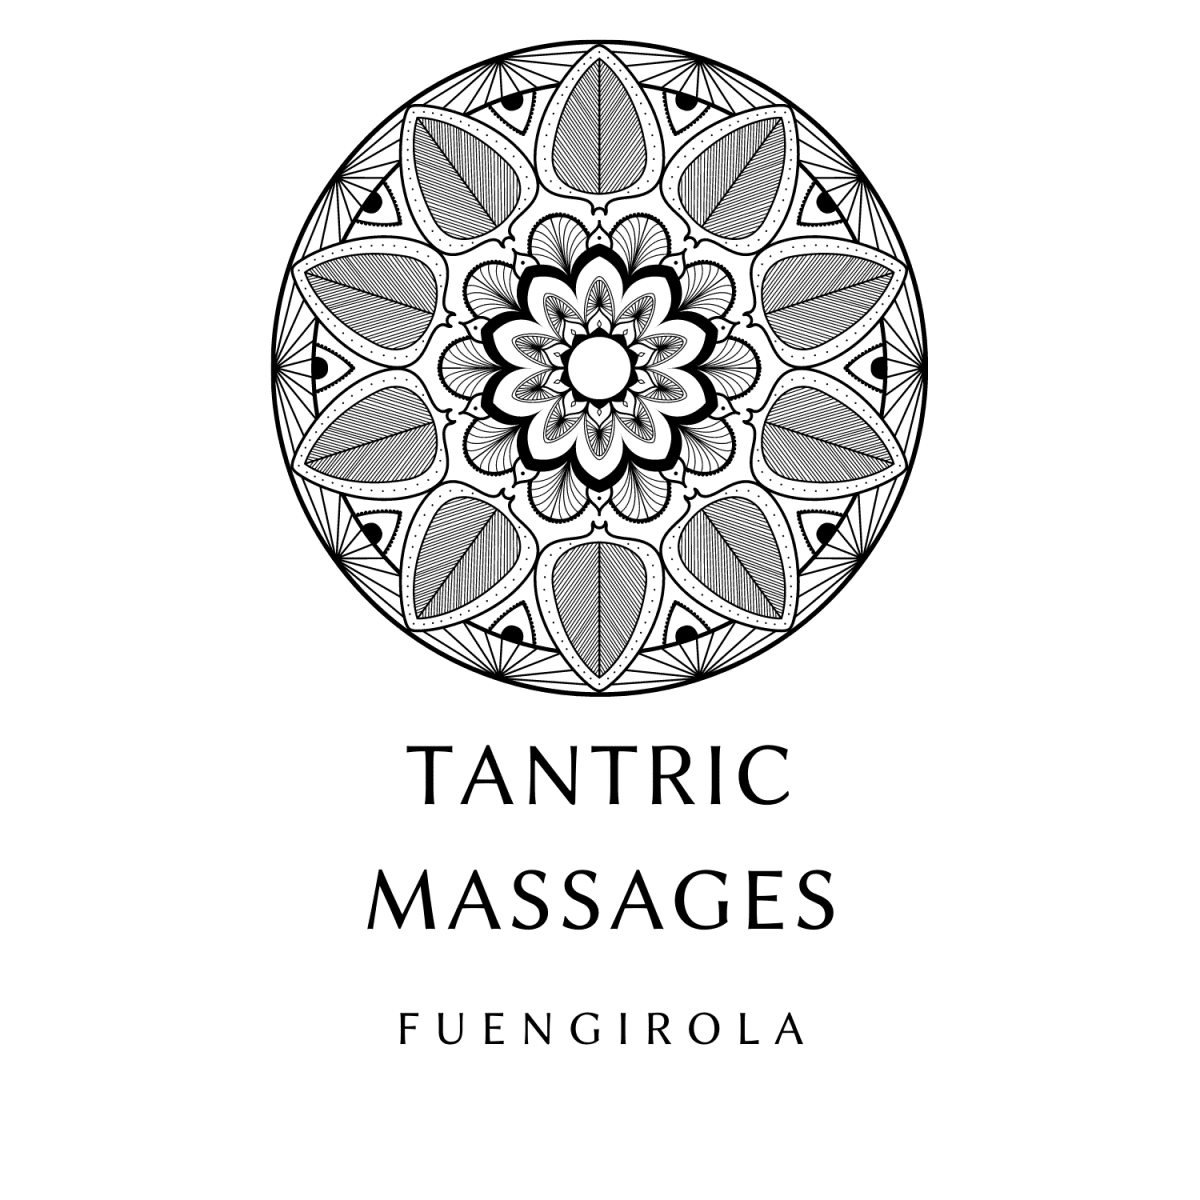 Nuru Erotic Massage In Fuengirola Tantric Massage Services